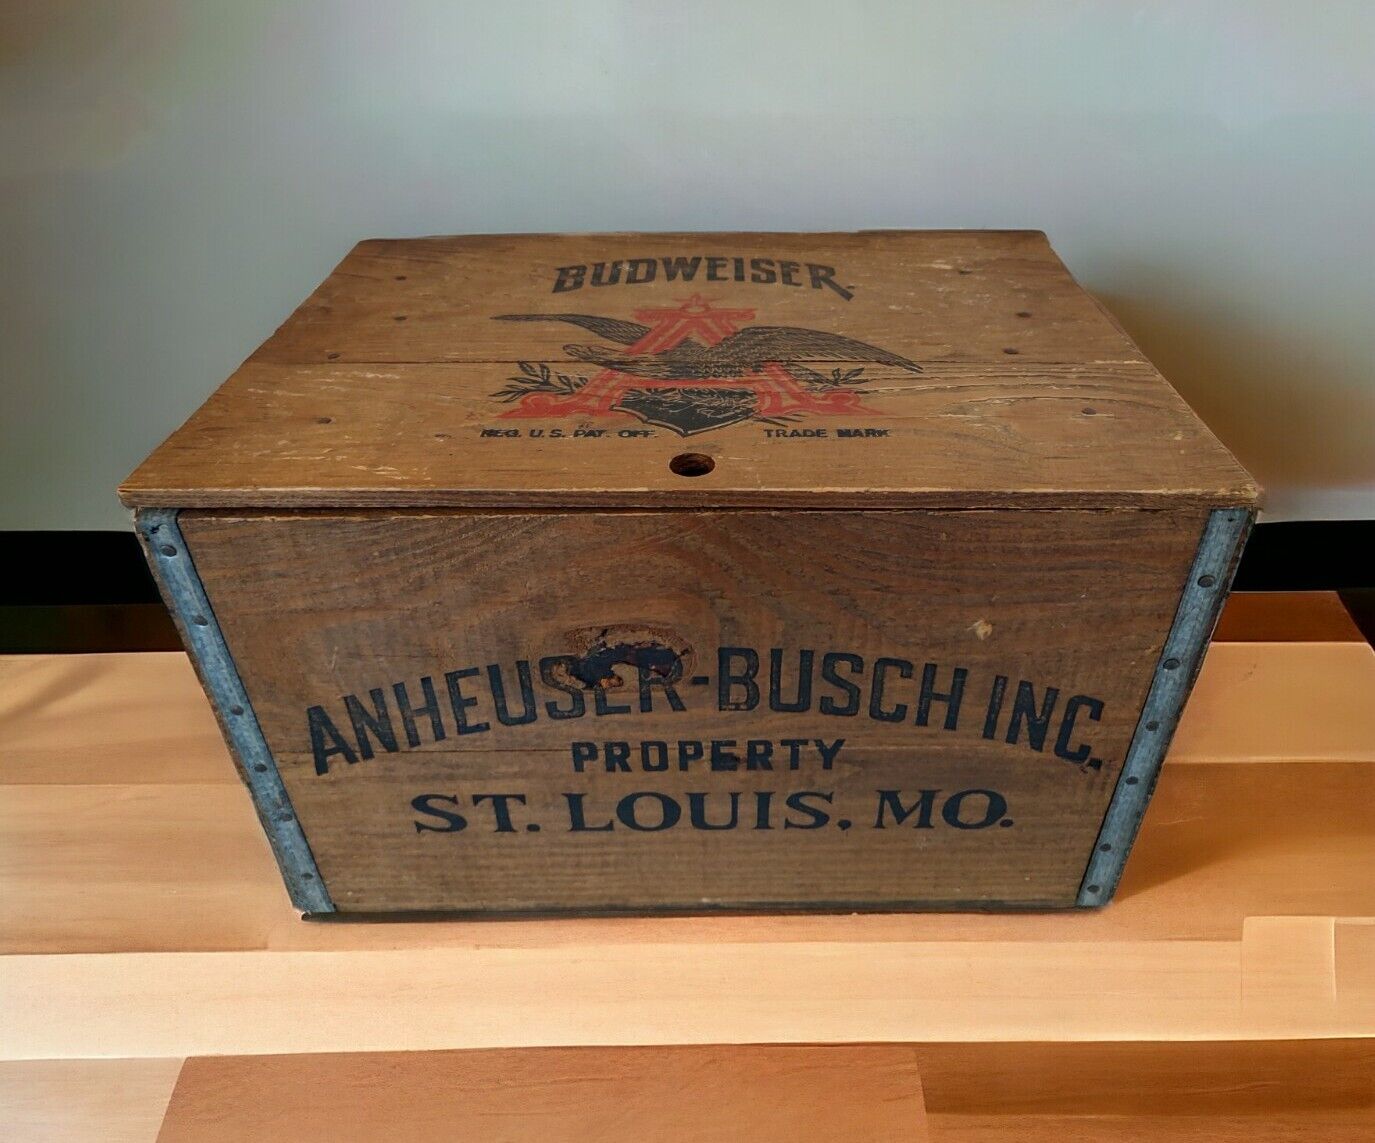 Budweiser Wood Beer Wooden Crate Box Checkers Lid Anheuser-Busch Since 1876